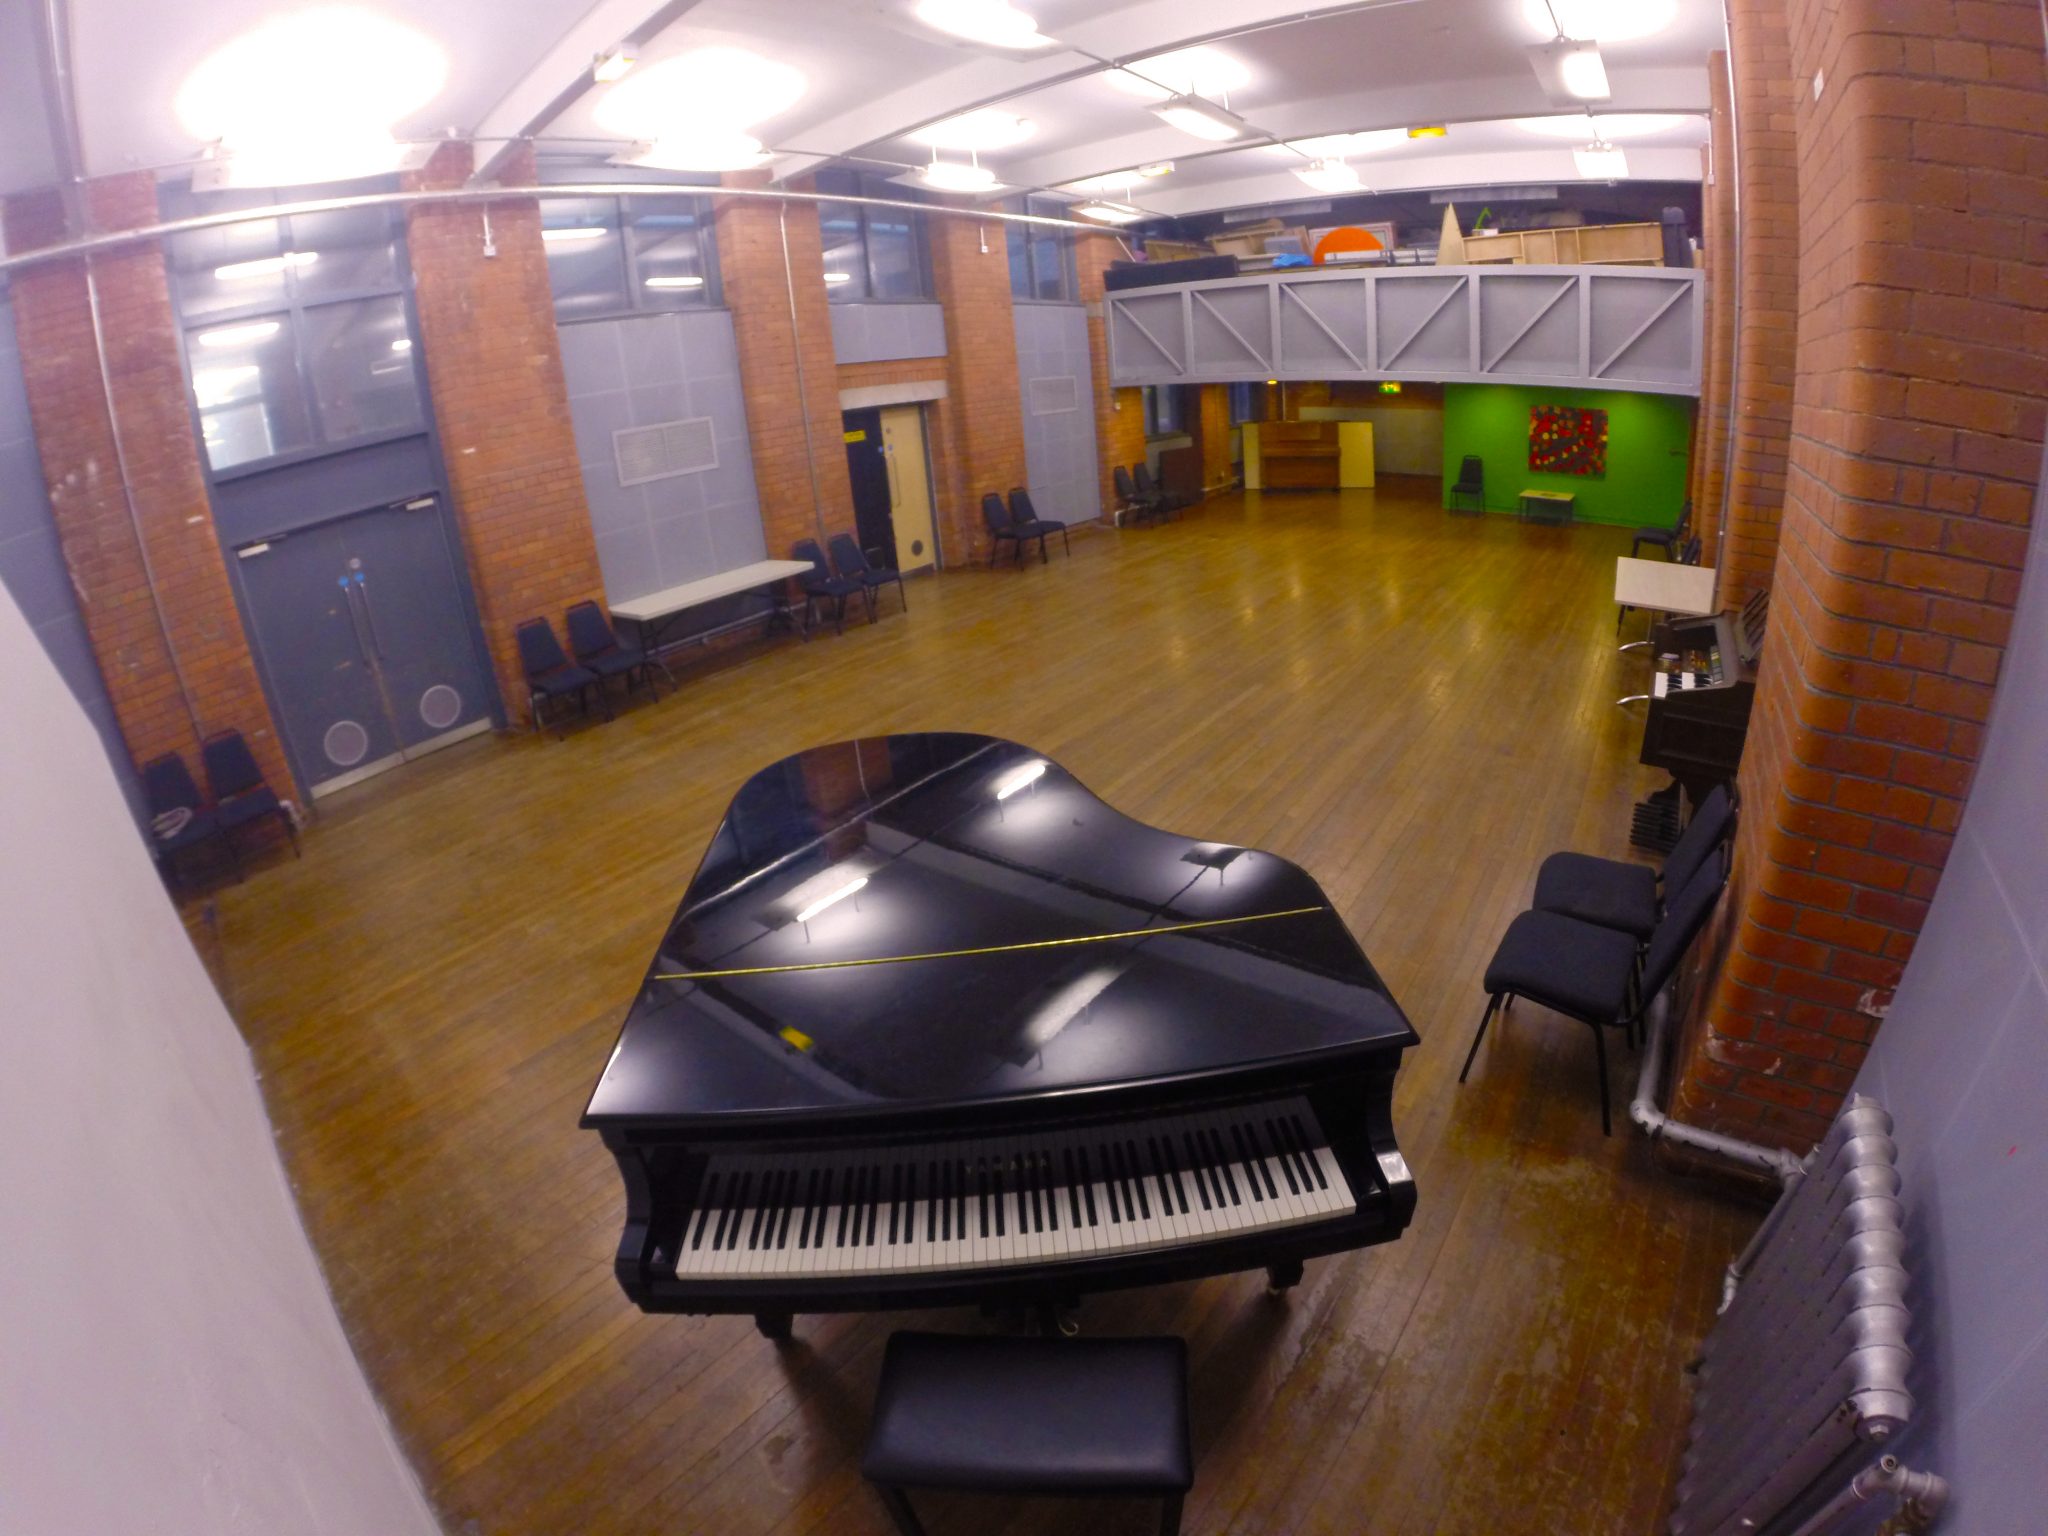 Studio-Z Recording Studio Manchester